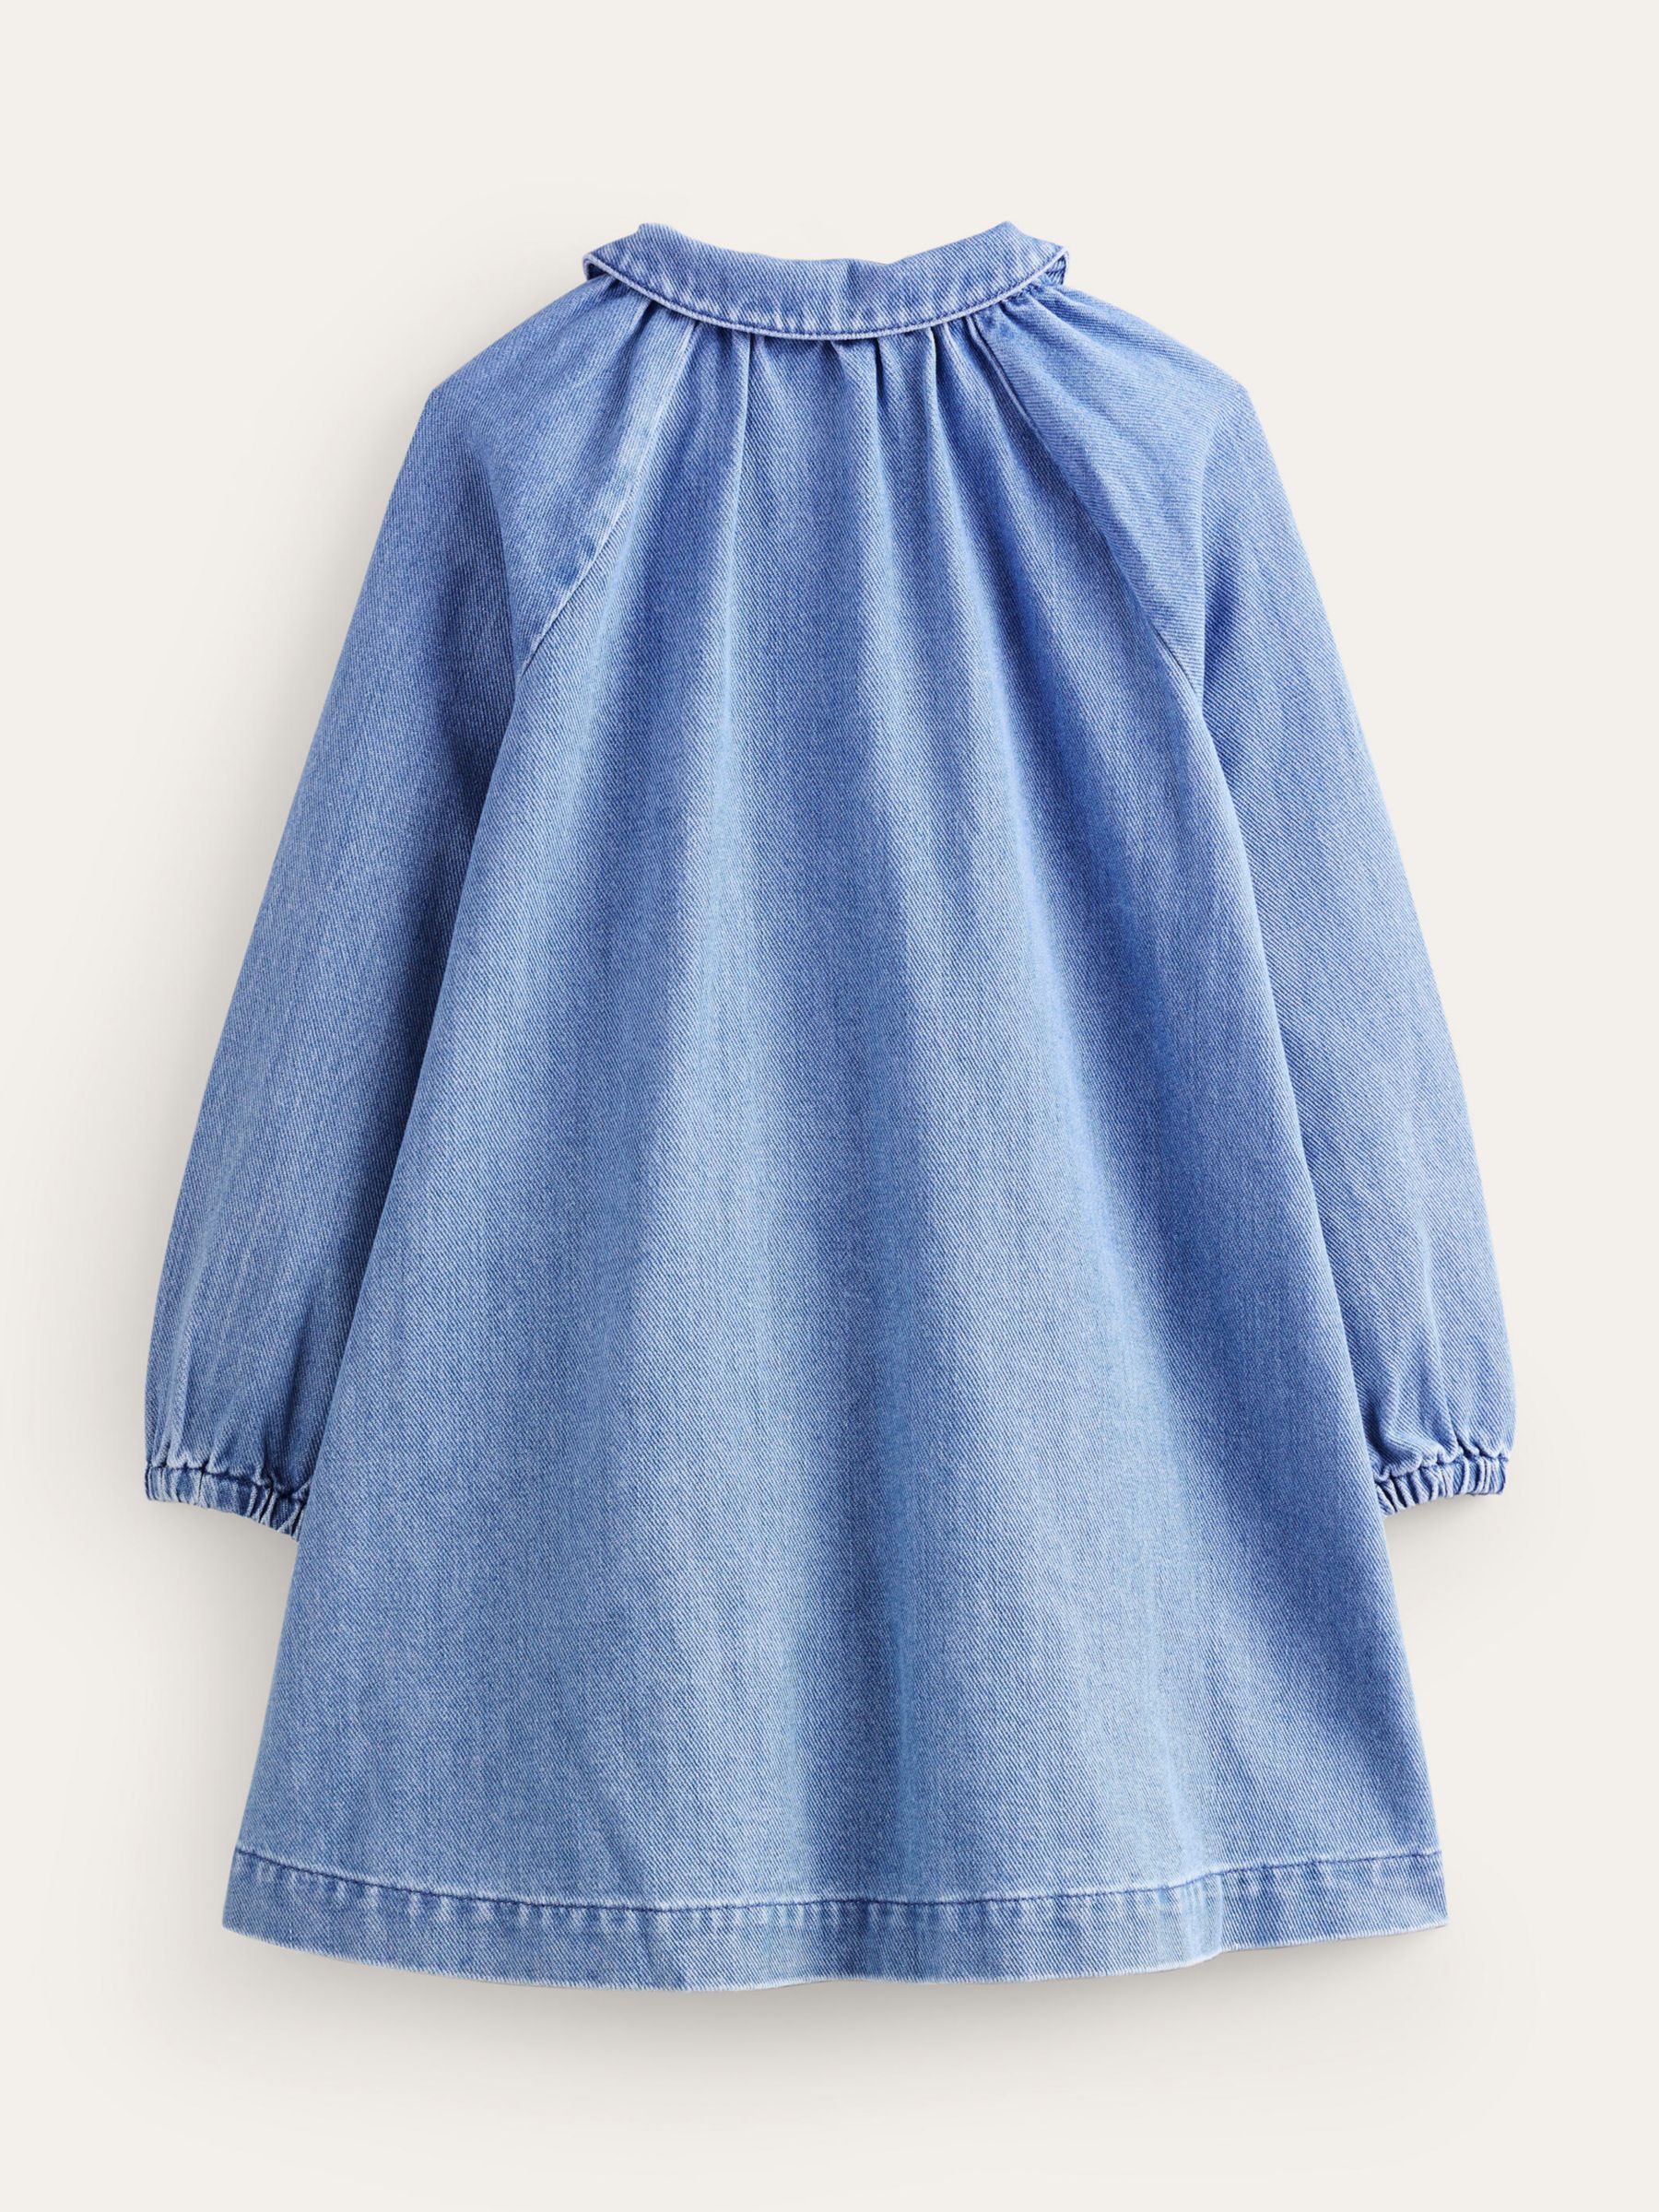 Mini Boden Kids' Weather Applique Shirt Dress, Mid Vintage Denim, 12-18 months